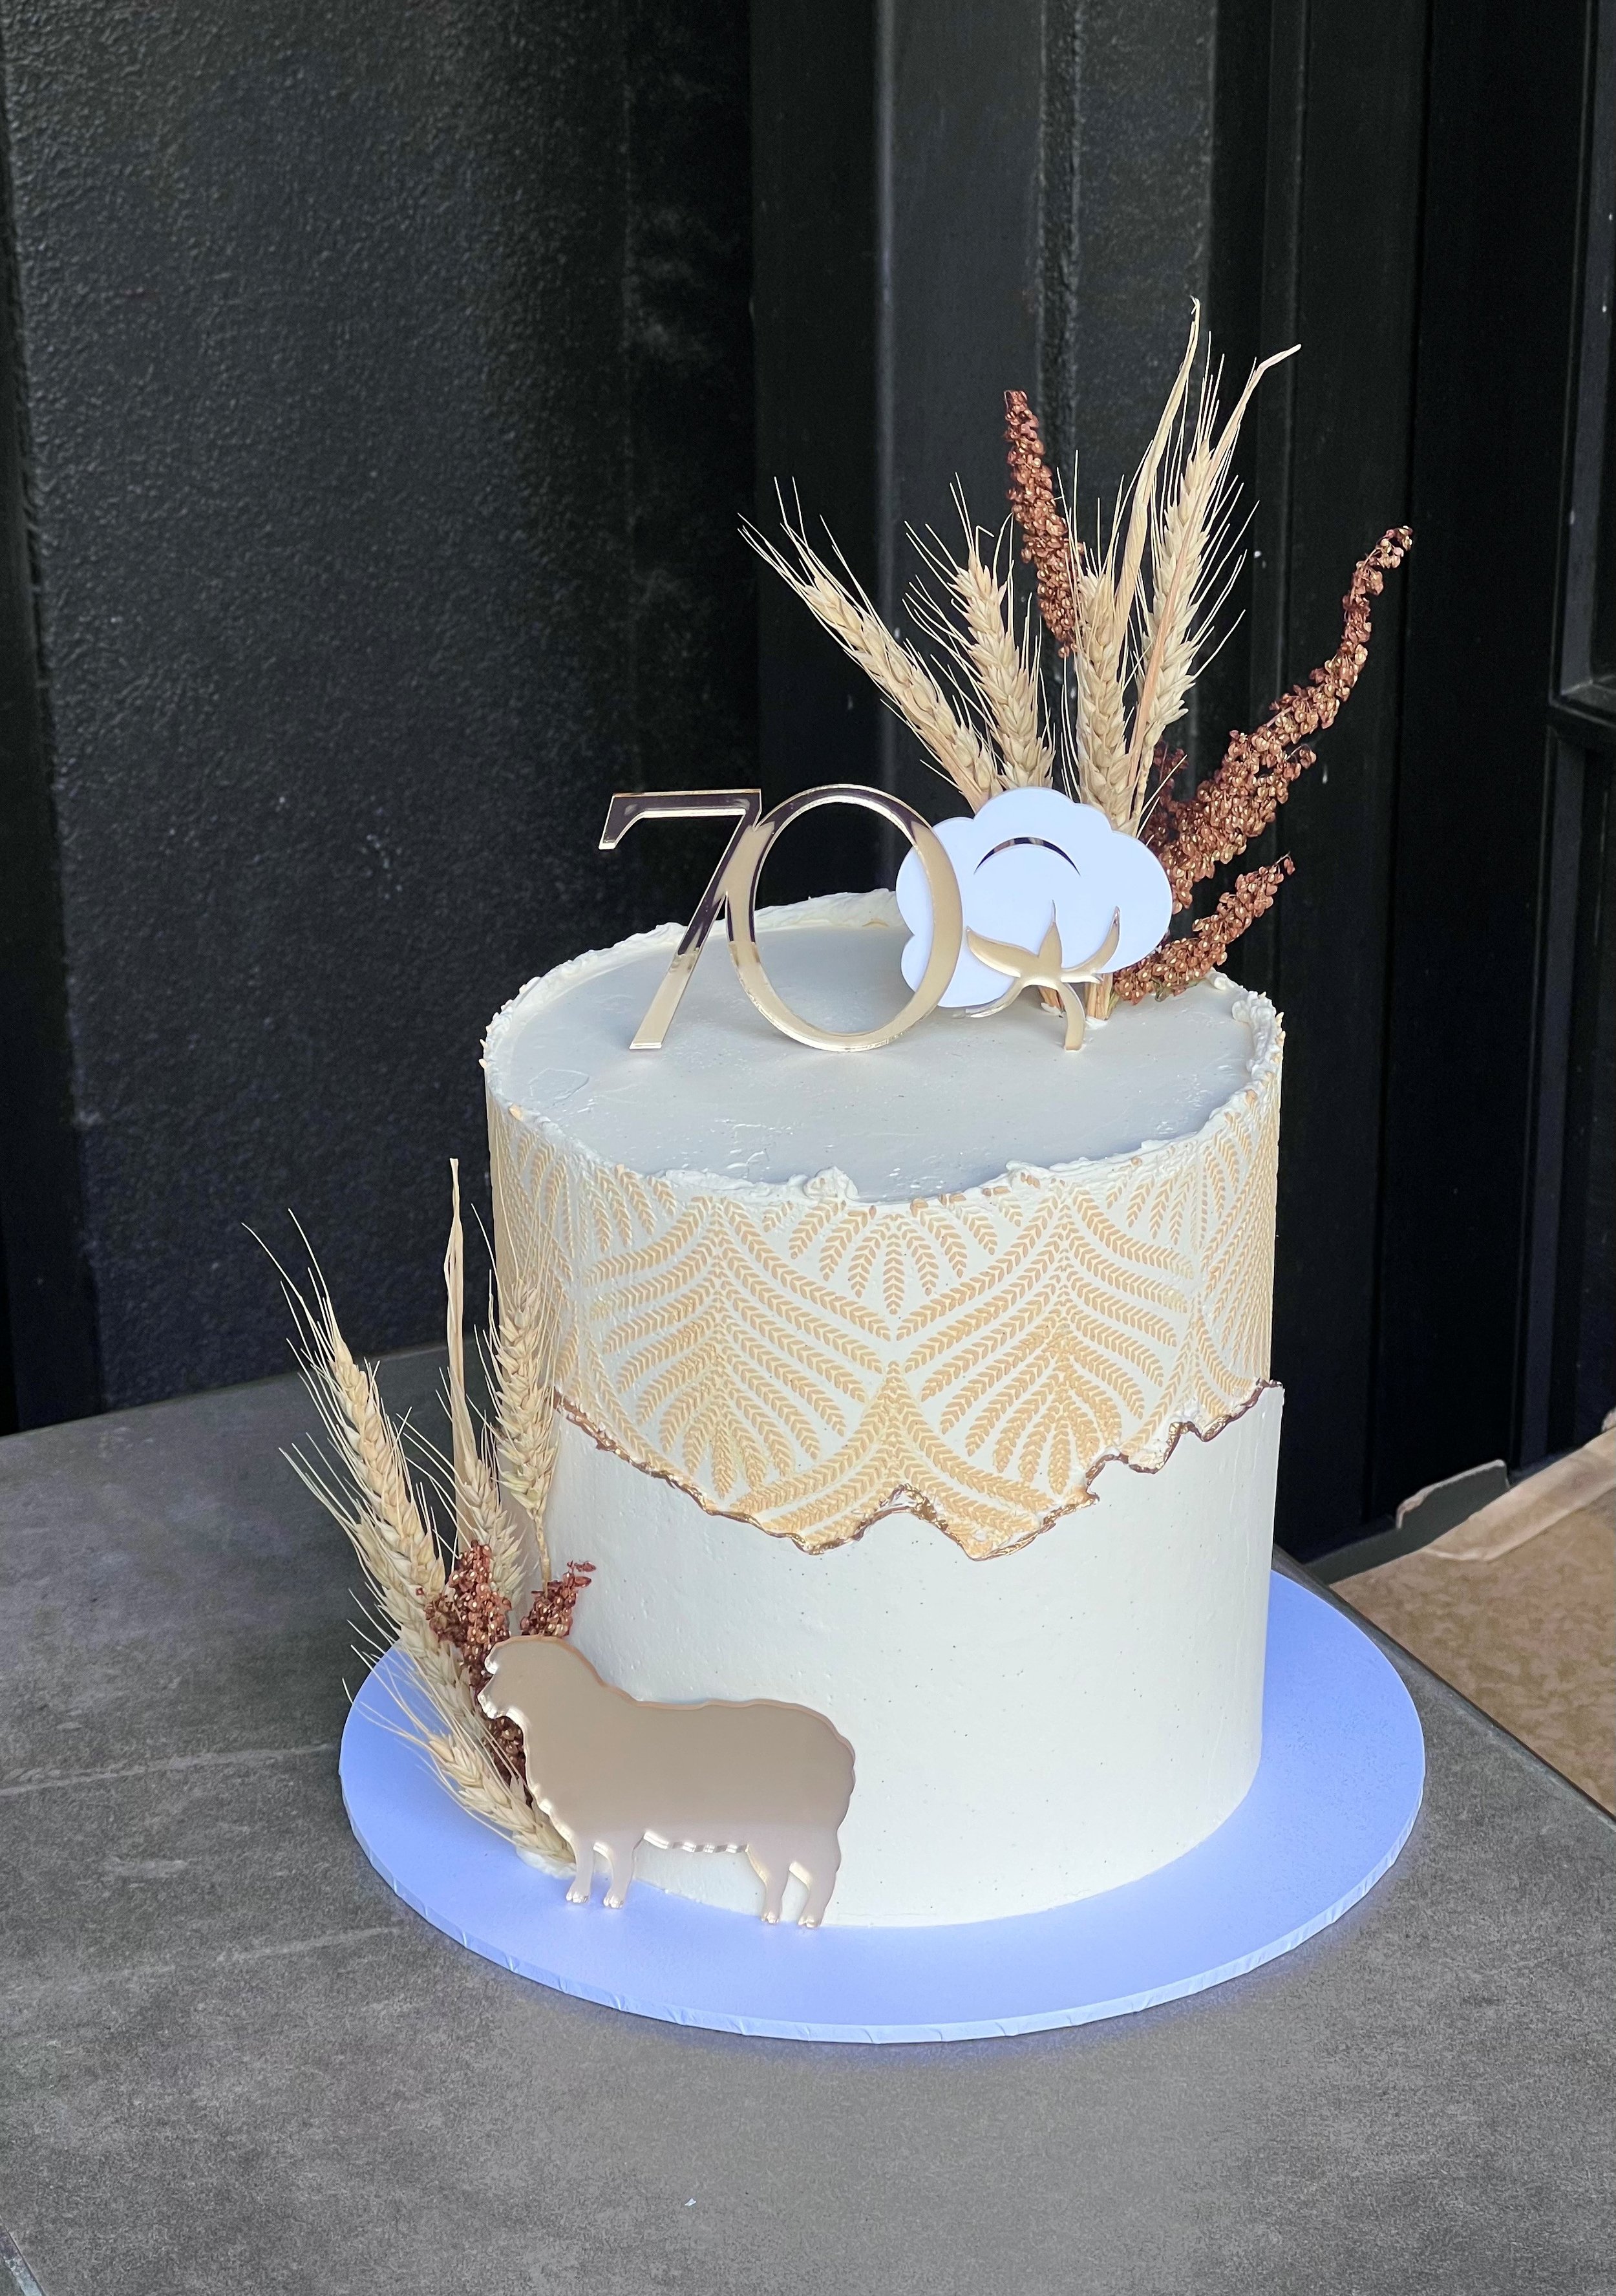 vanillapodspecialtycakes-noveltycakes-brisbanecakes-birthdaycakebrisbane-buttercreamcake (5).jpg